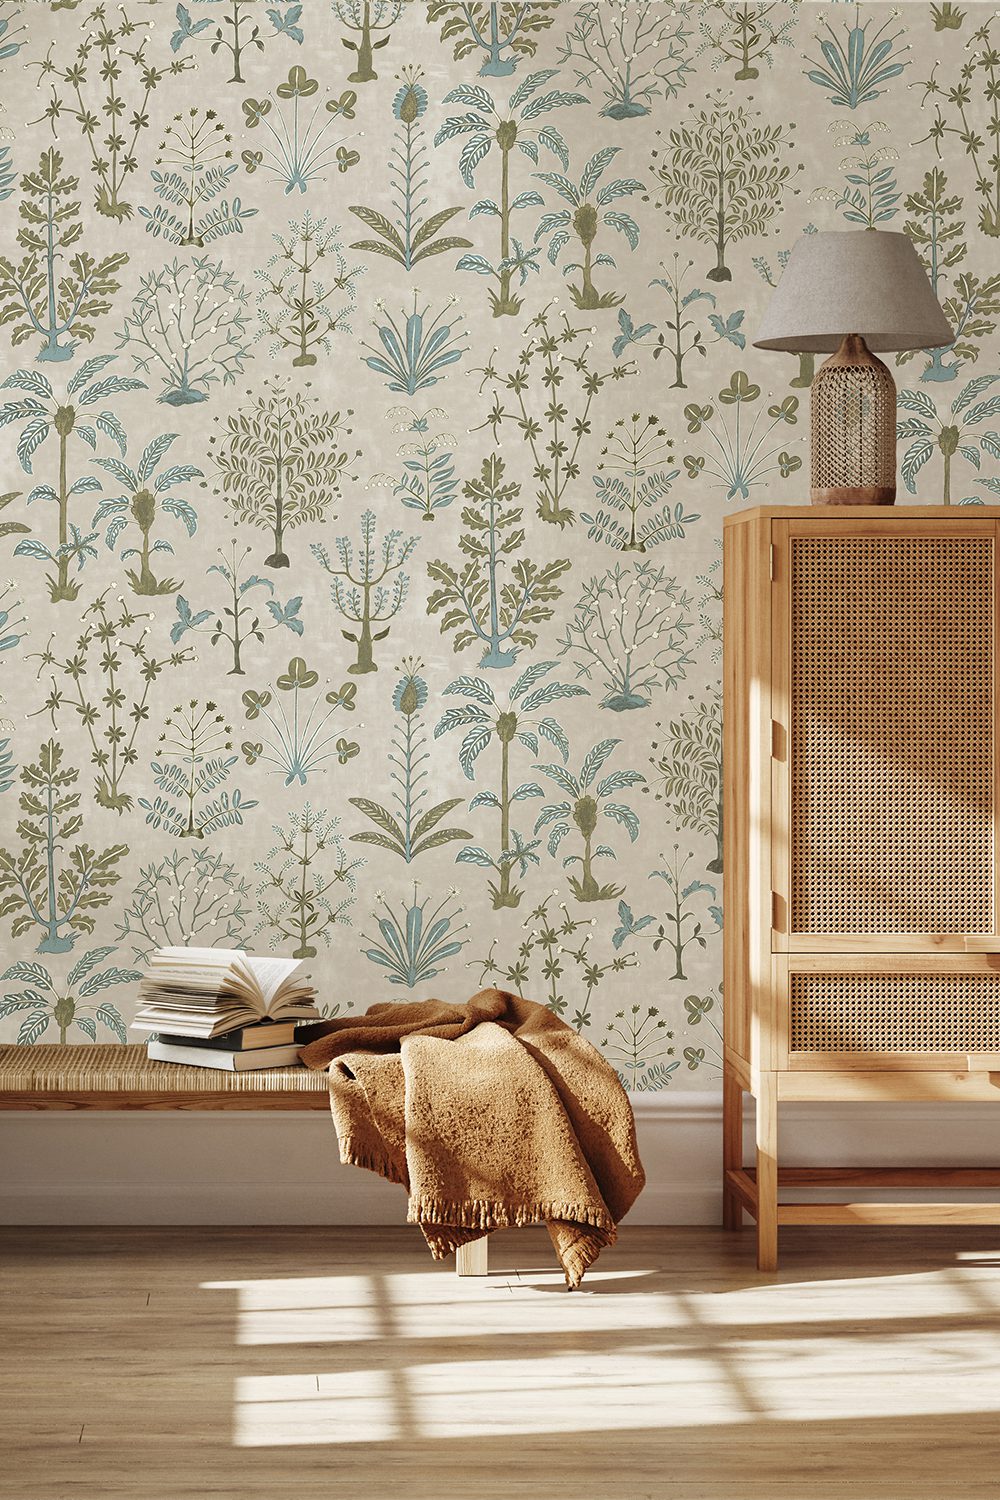 Josephine-munsey-wallpaper-cynthia-tree-soft-design-stone-olive-light-blue-nature-inspired-design-hallway-rattan